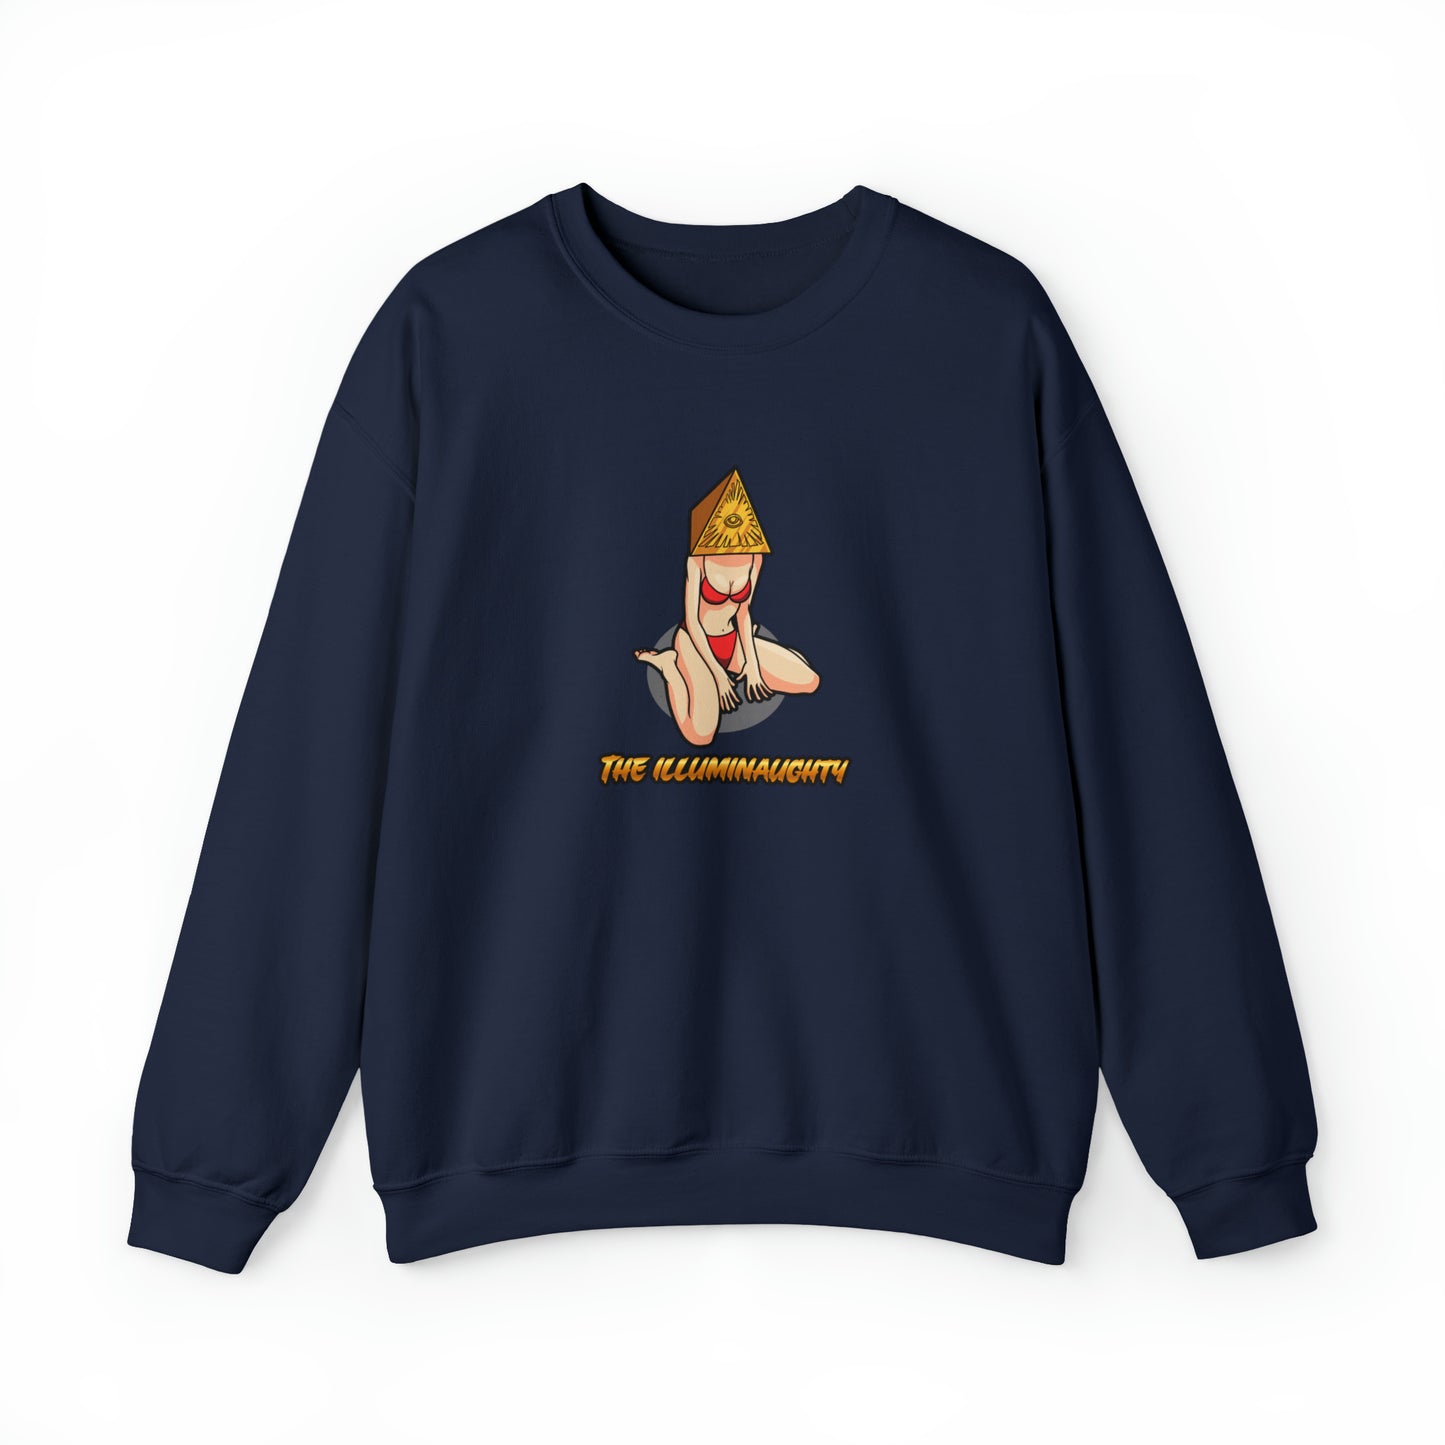 Custom Parody Crewneck Sweatshirt, The Illuminaughty Design